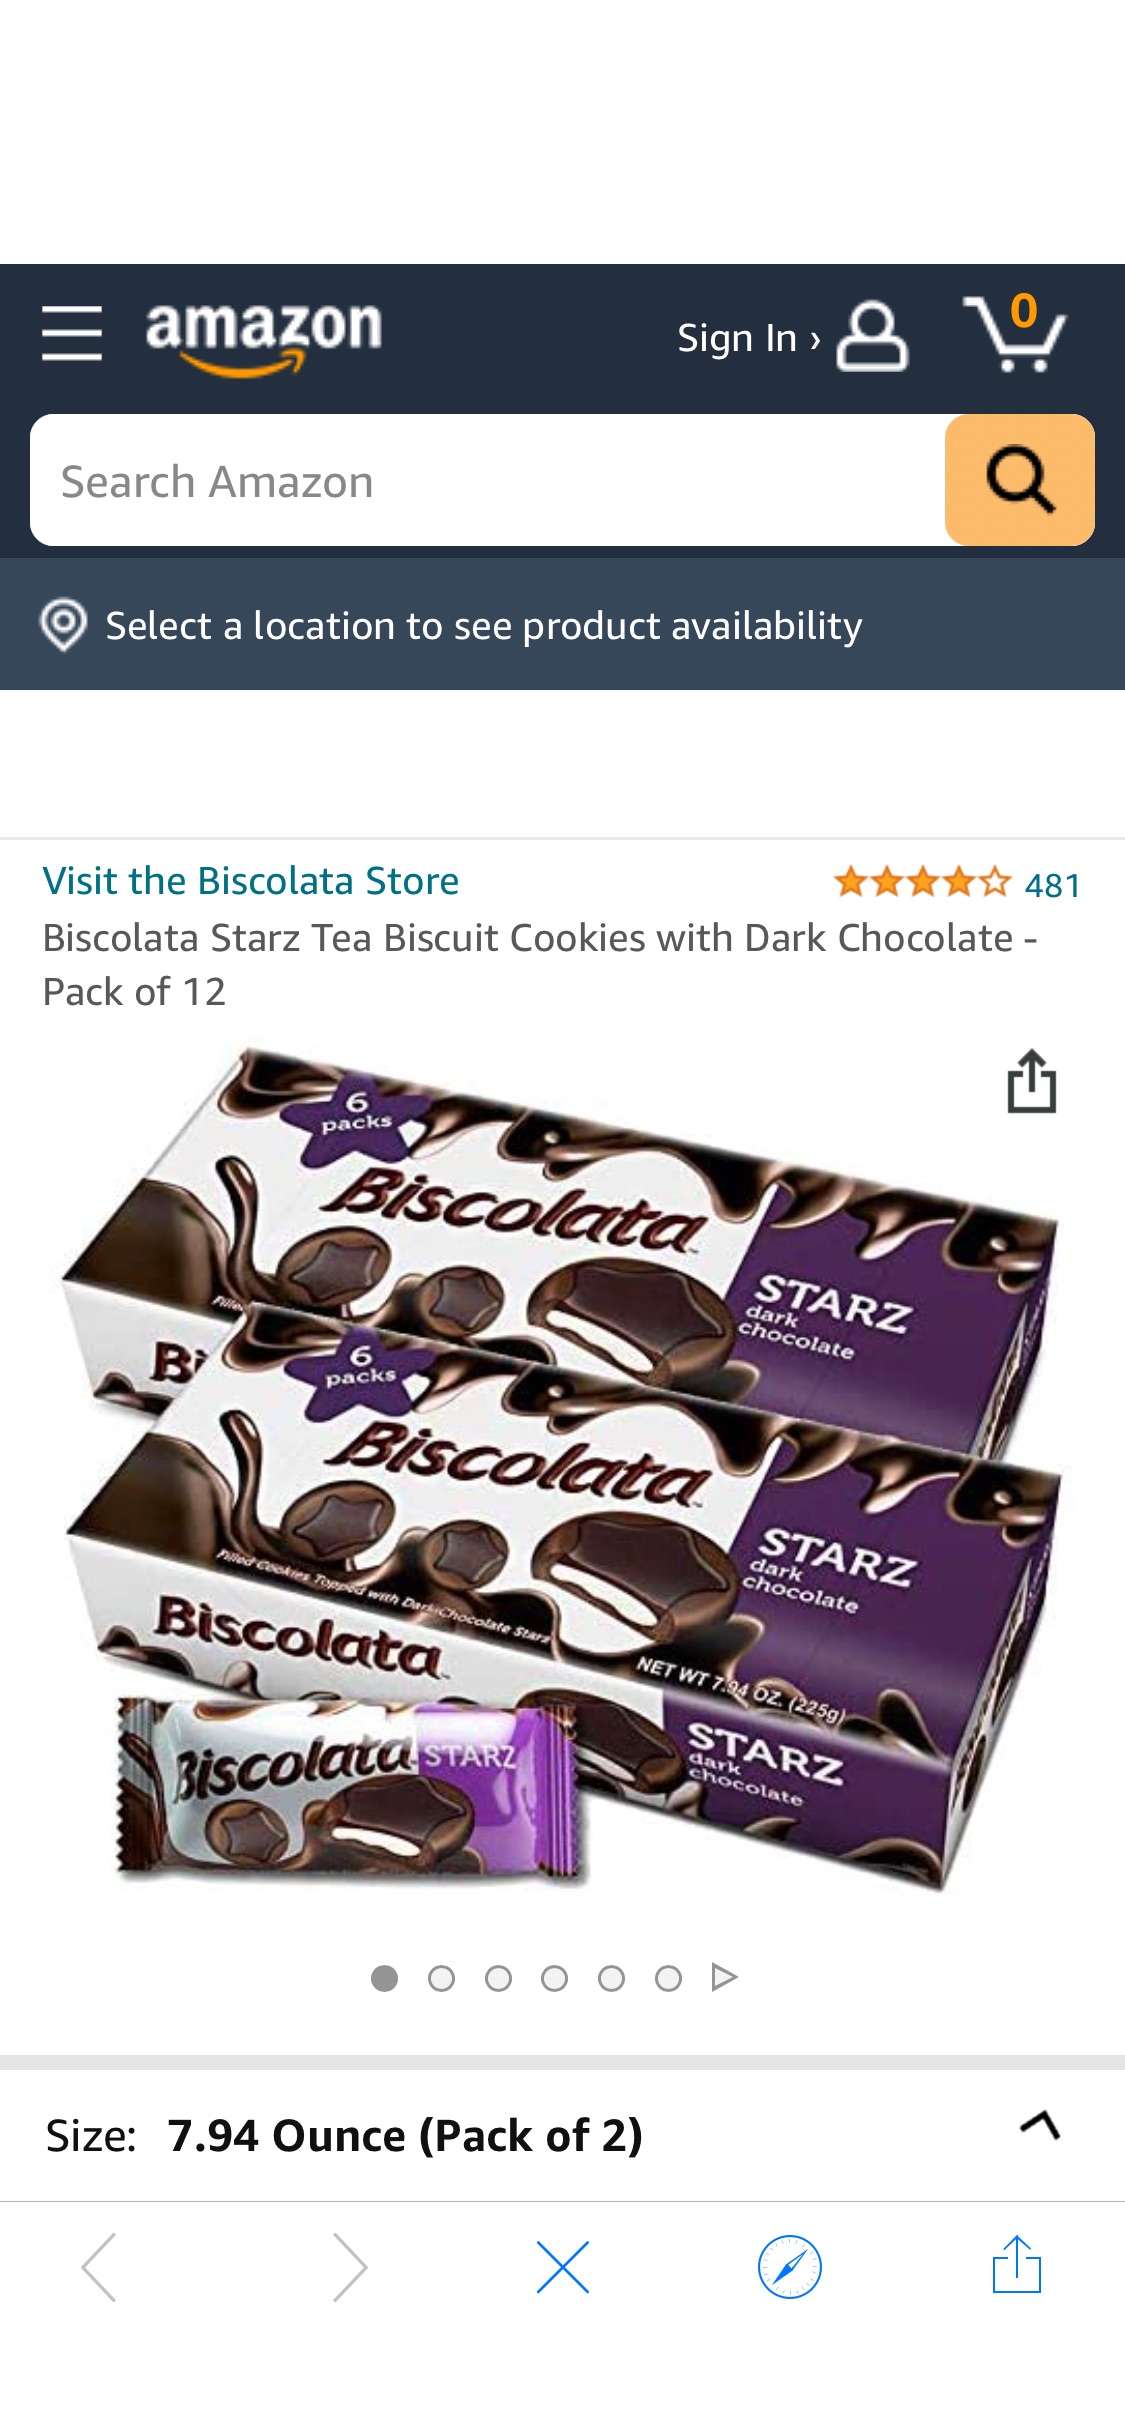 Amazon.com: Biscolata Starz Tea Biscuit Cookies with Dark Chocolate - Pack of 12 : Grocery & Gourmet Food 零食